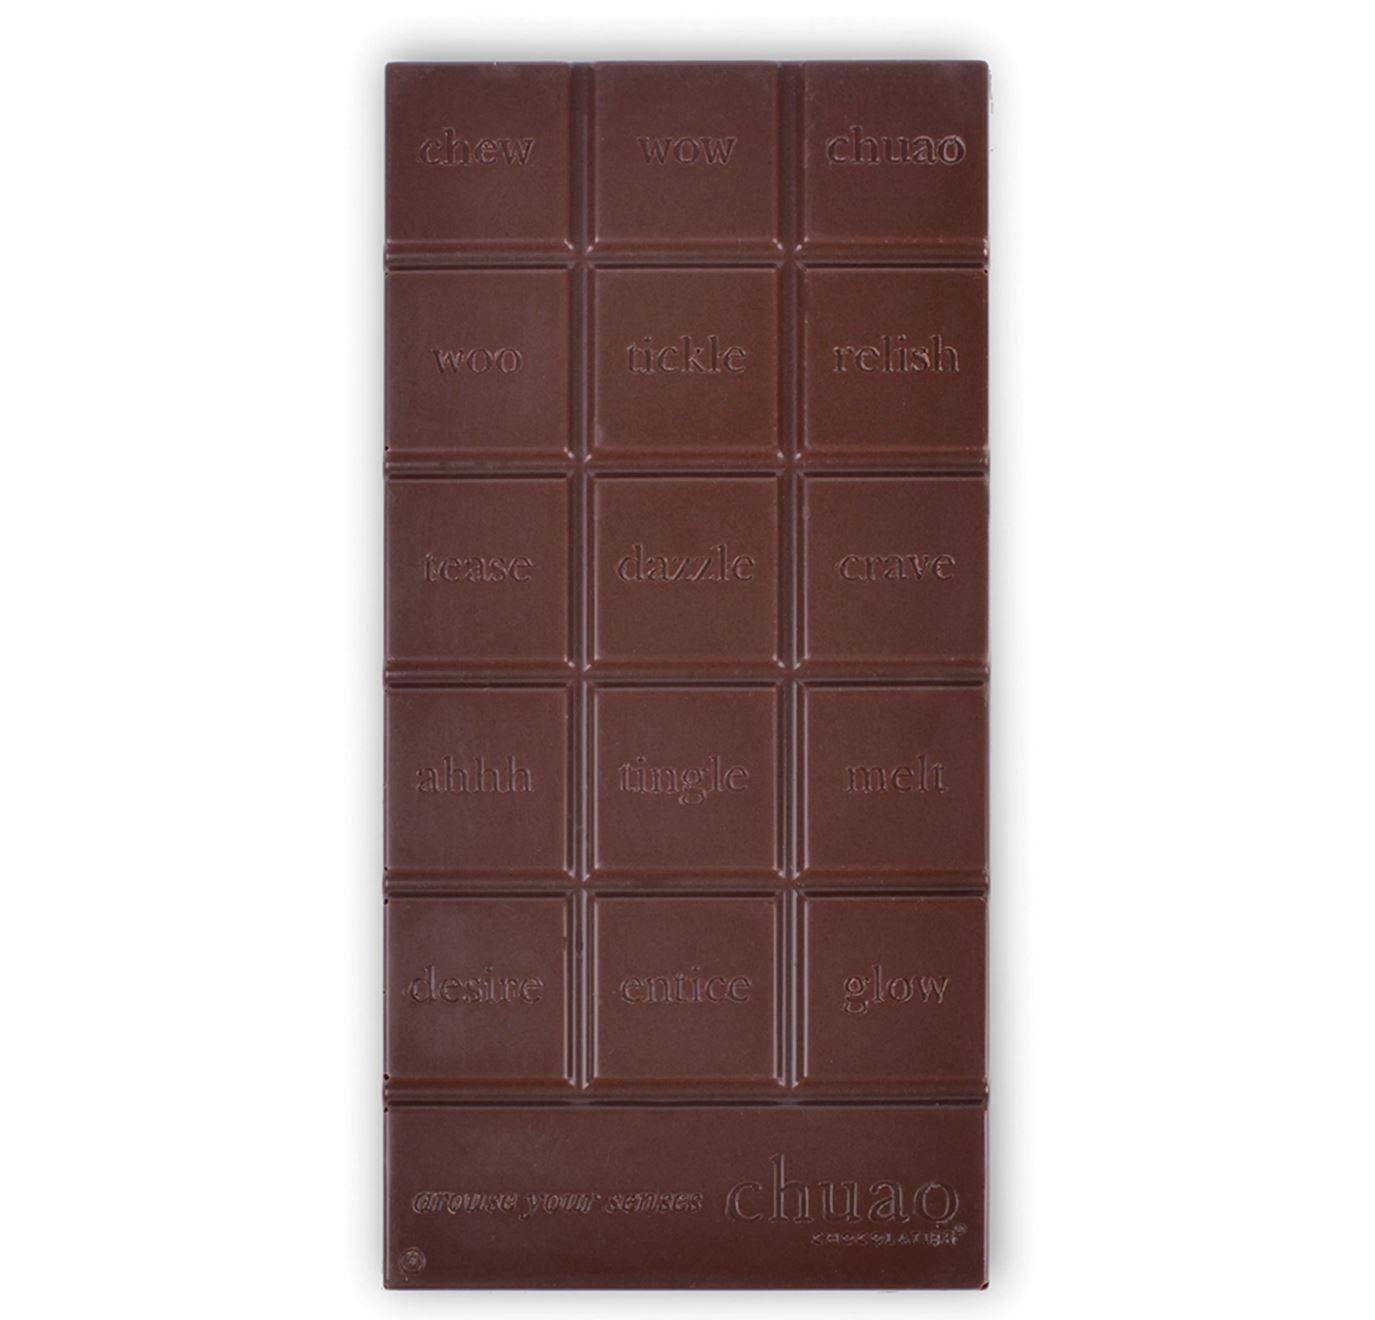 Chuao Chocolatier | Spicy Maya Chocolate Bar